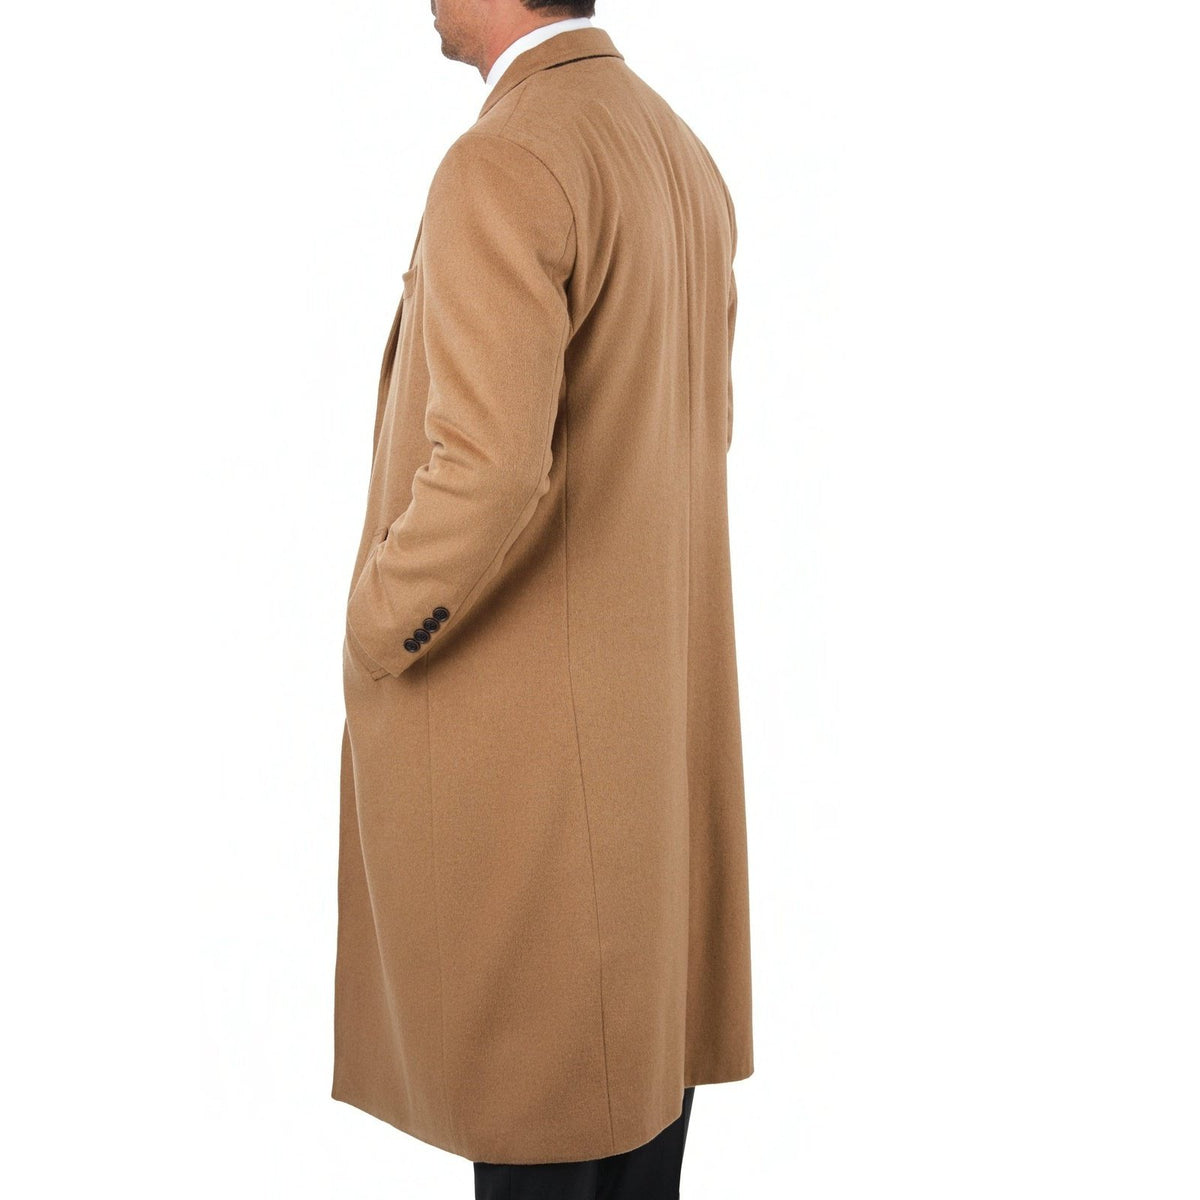 Arthur Black OUTERWEAR Mens Regular Fit Solid Camel Tan Full Length Wool Cashmere Overcoat Top Coat